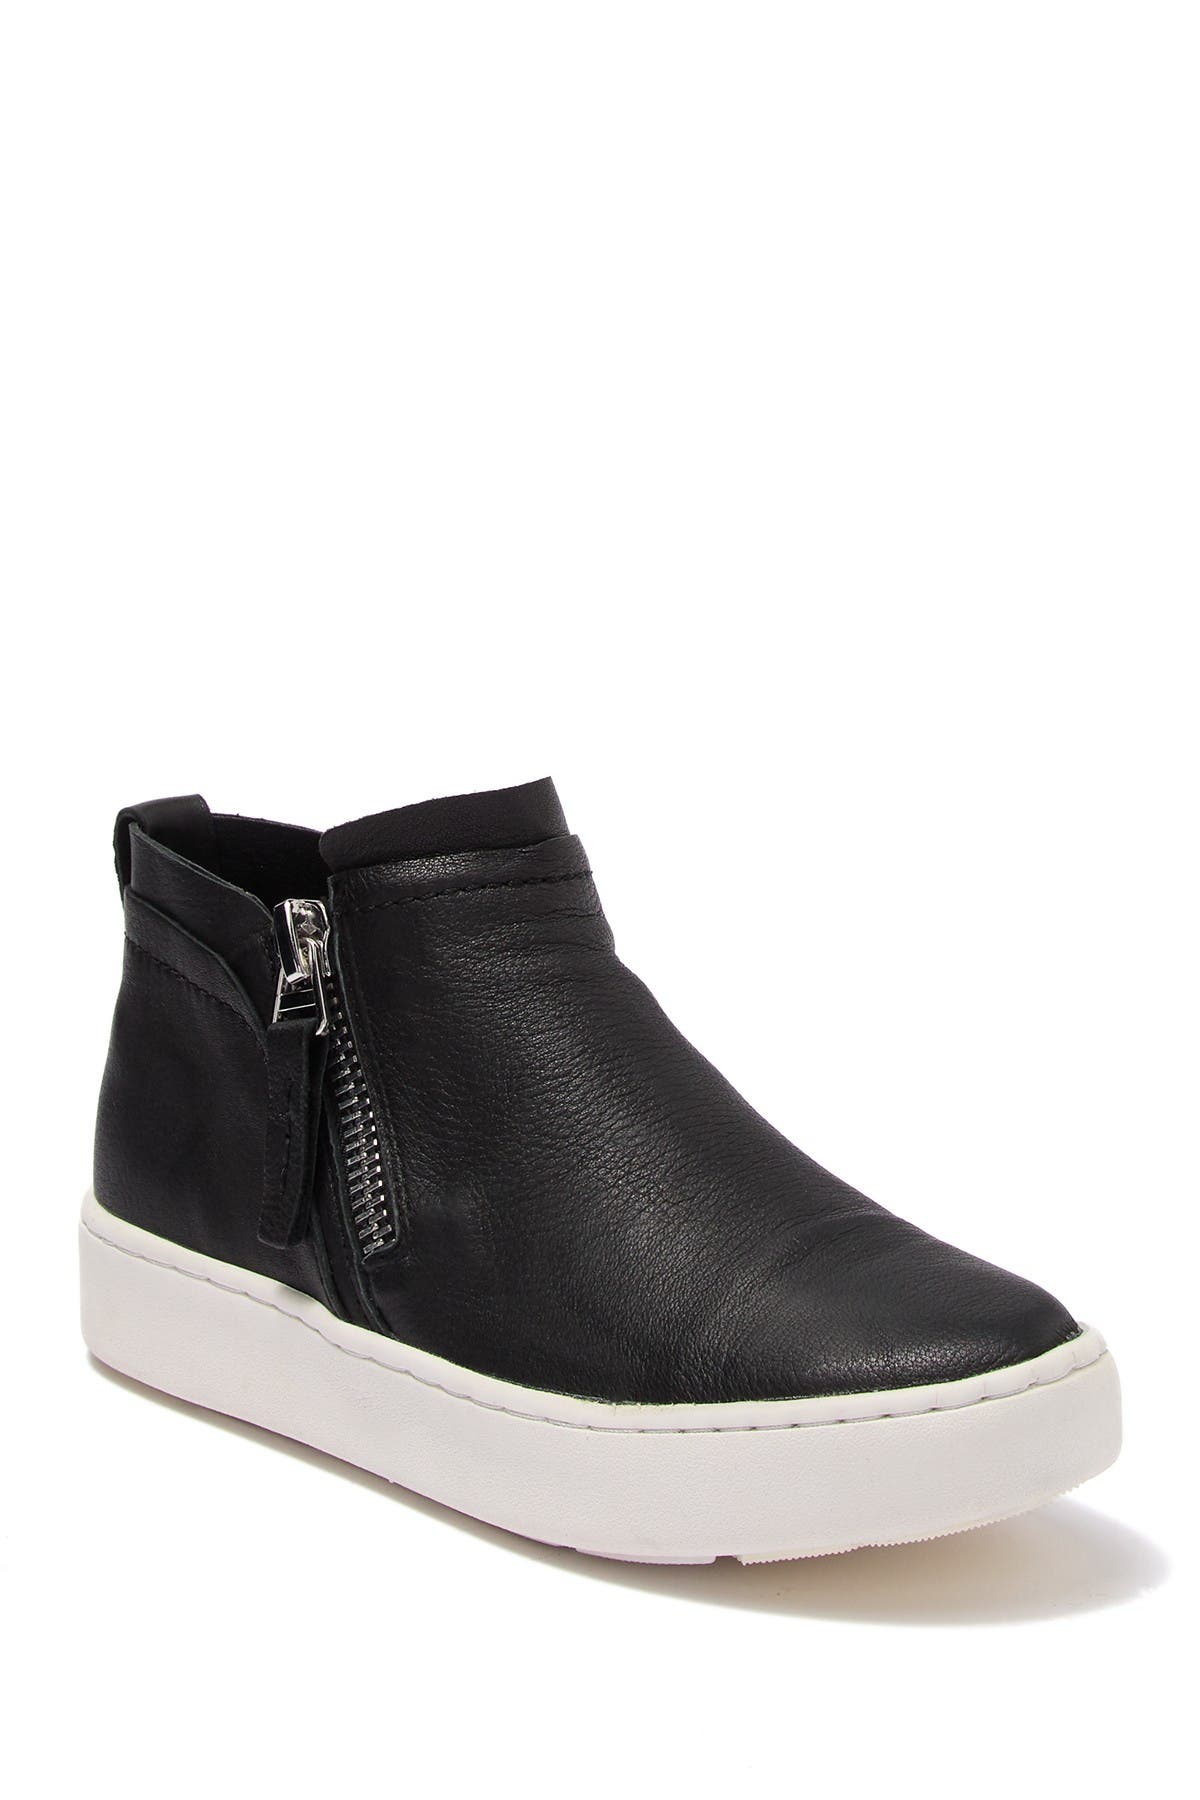 Dolce Vita | Tobee Leather Zip Sneaker 